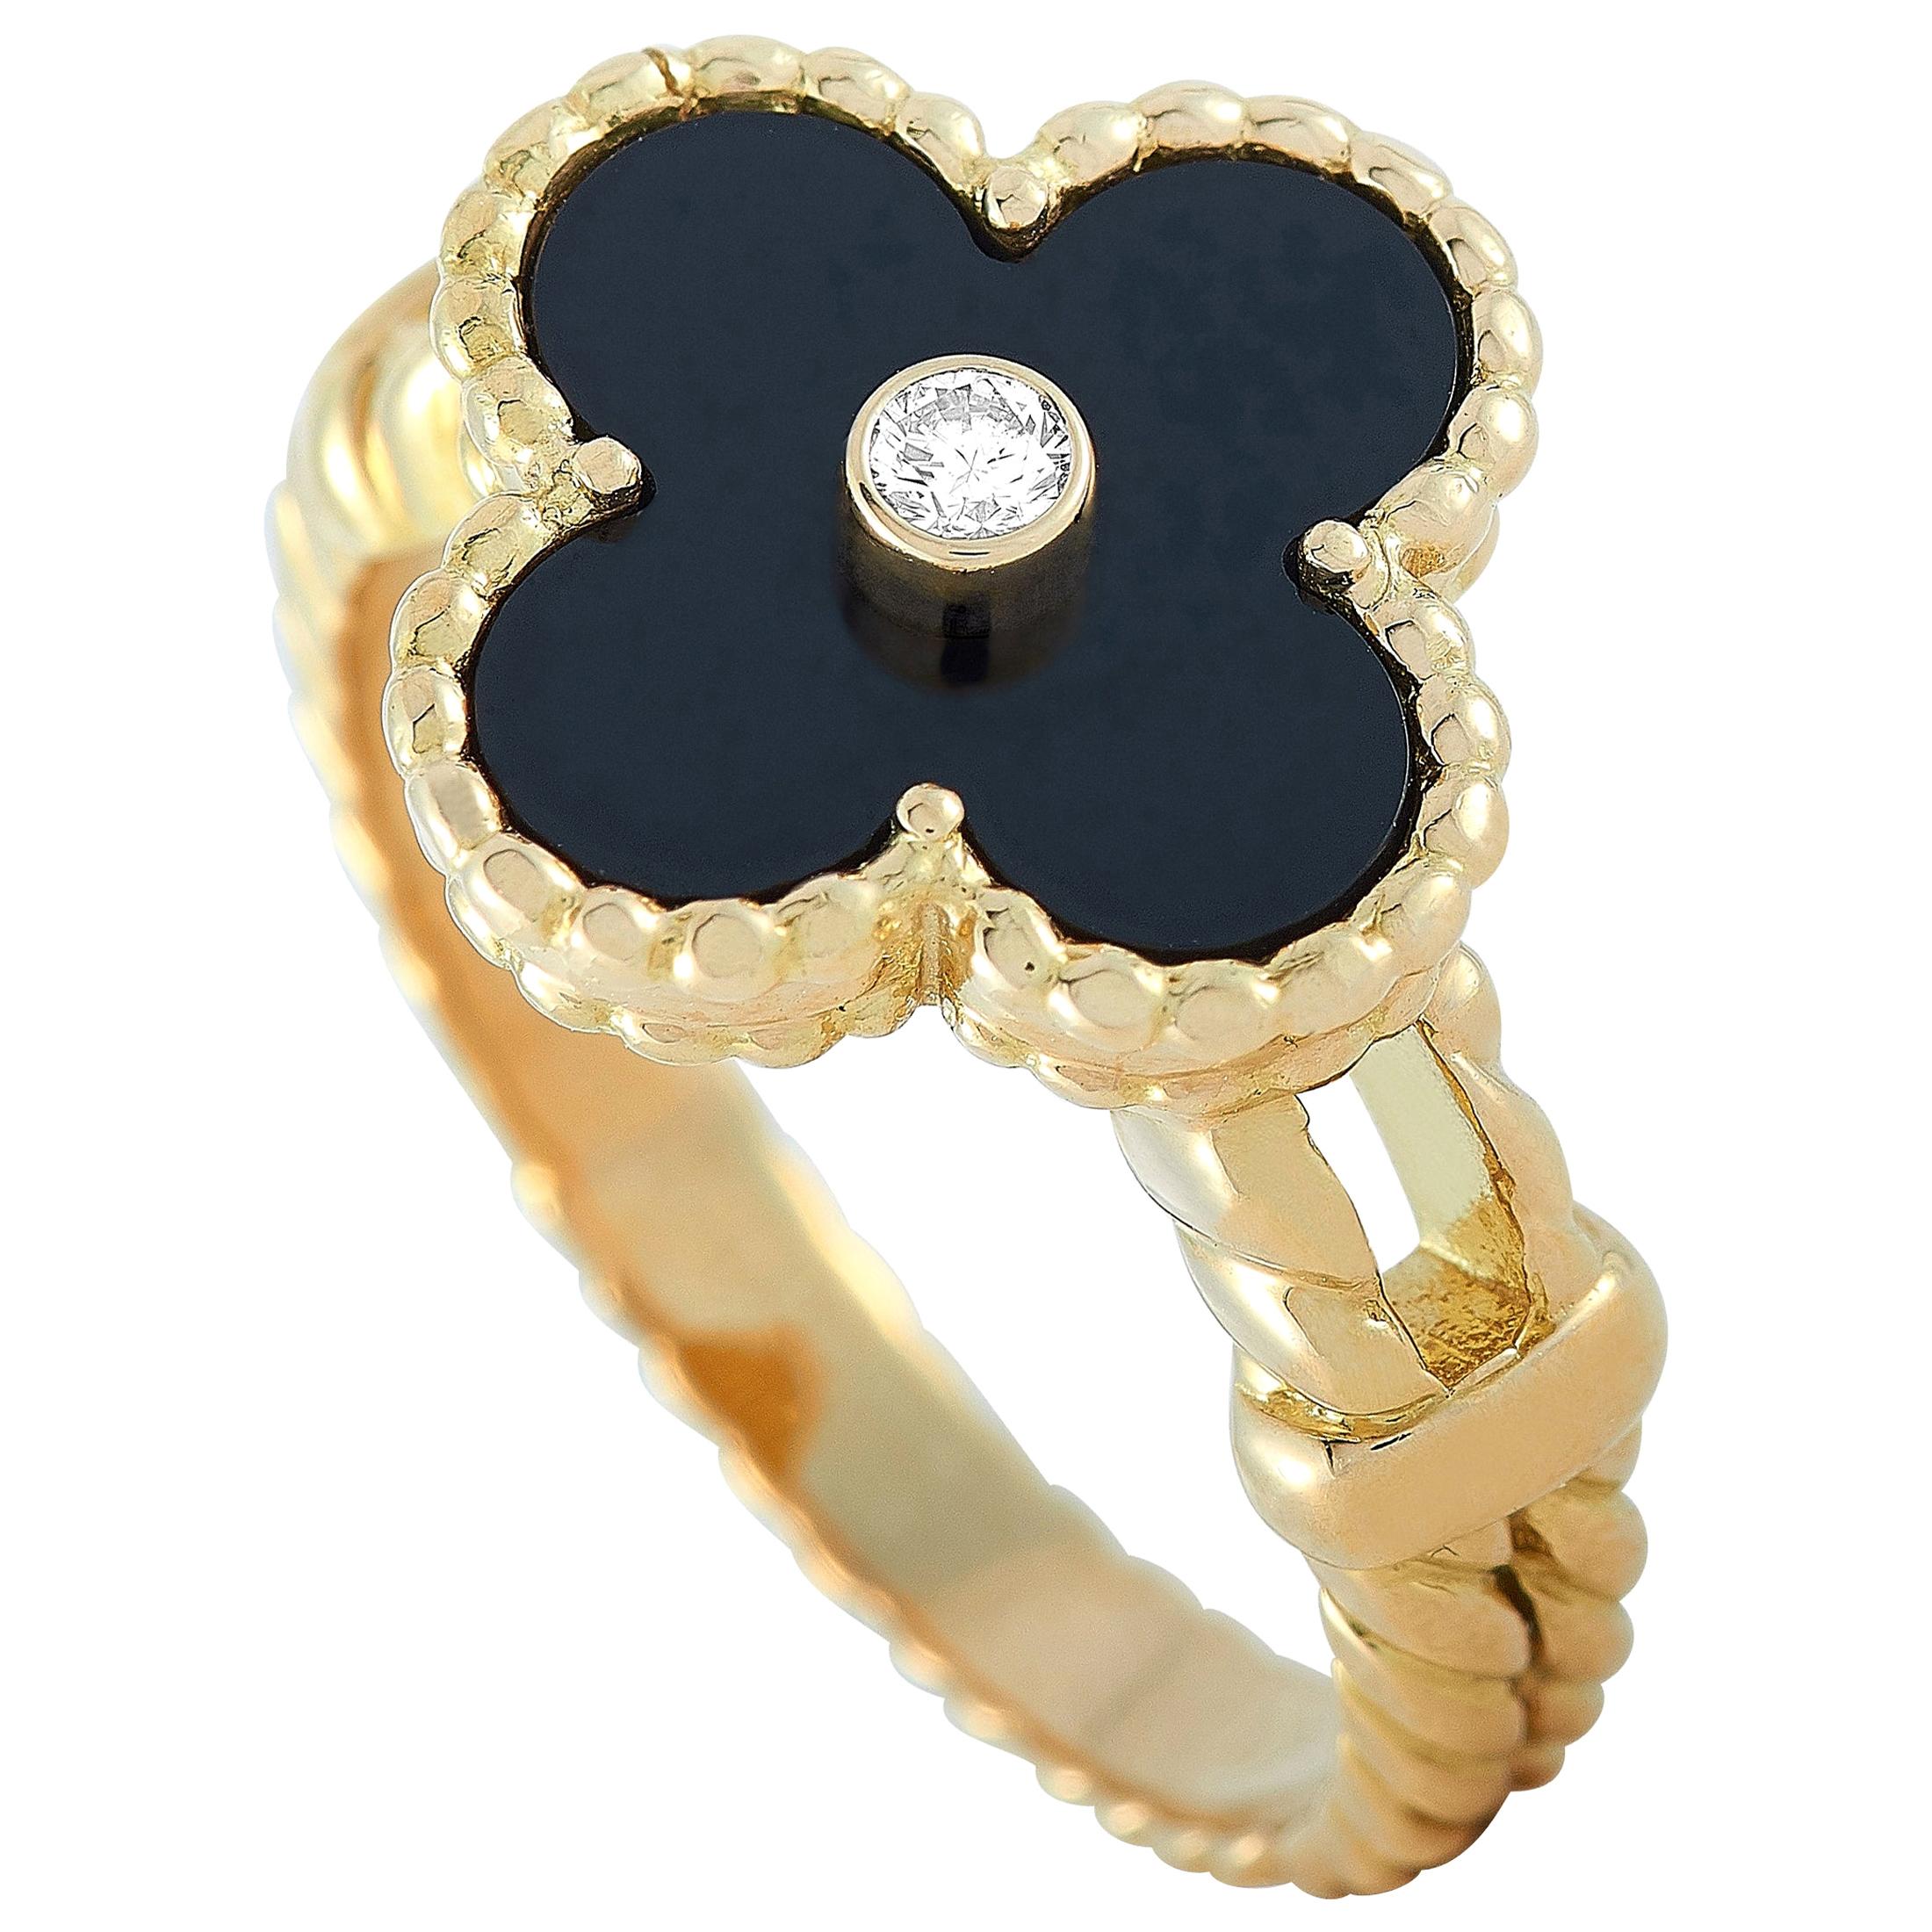 Van Cleef & Arpels Alhambra 18 Karat Yellow Gold Diamond and Onyx Ring